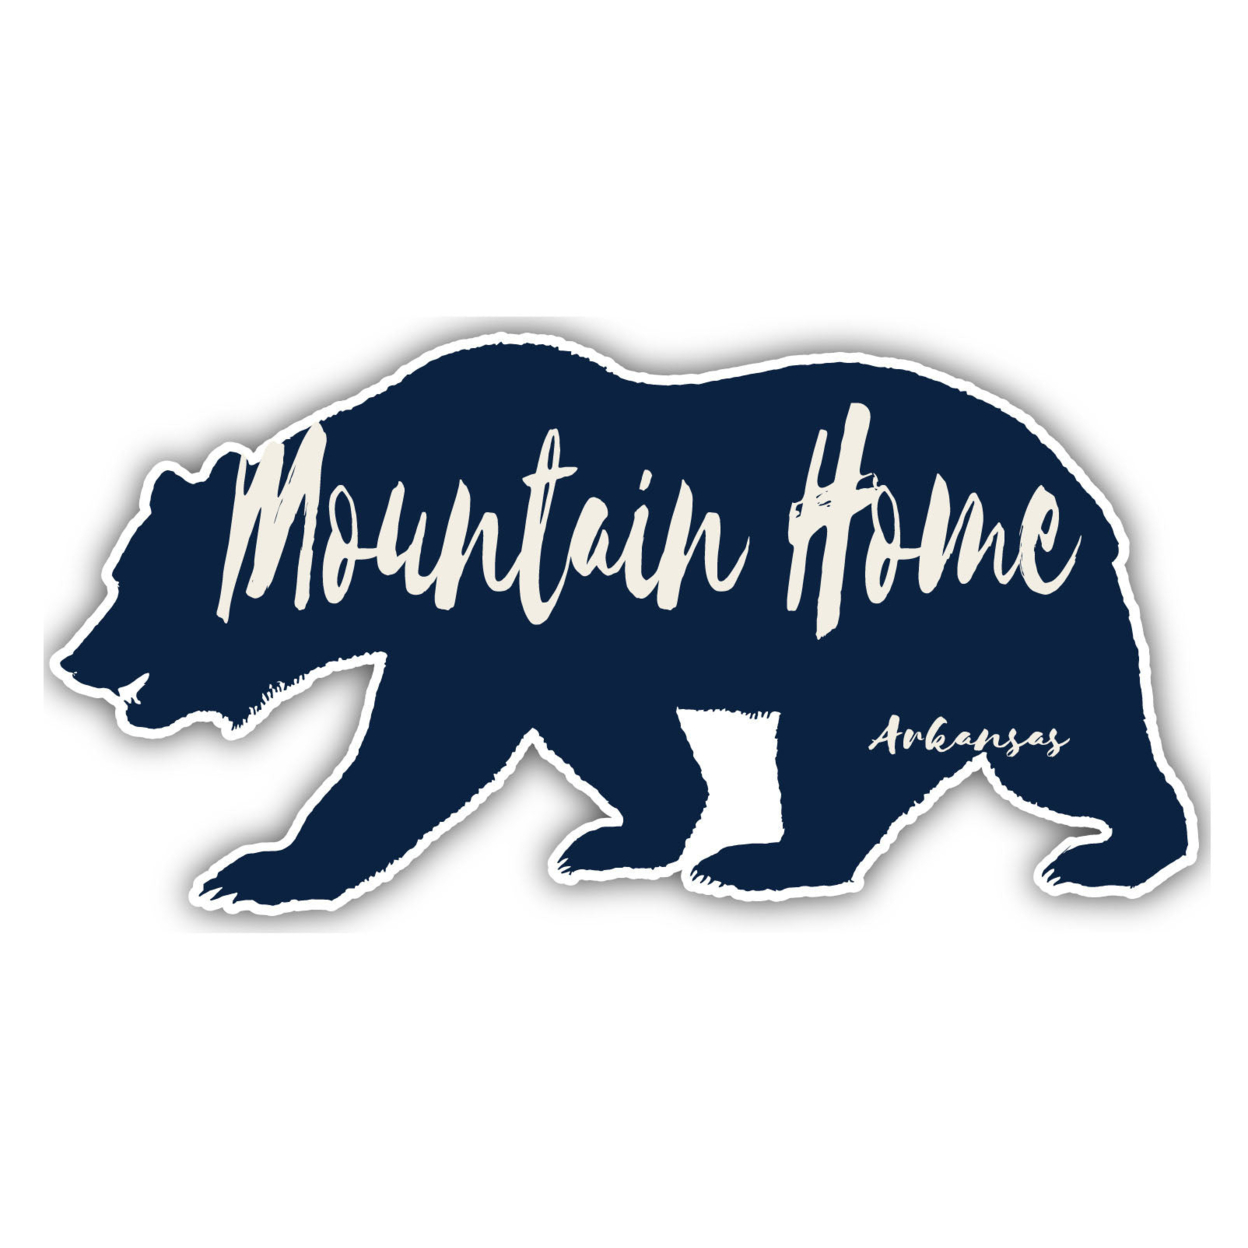 Mountain Home Arkansas Souvenir Decorative Stickers (Choose Theme And Size) - Single Unit, 2-Inch, Bear